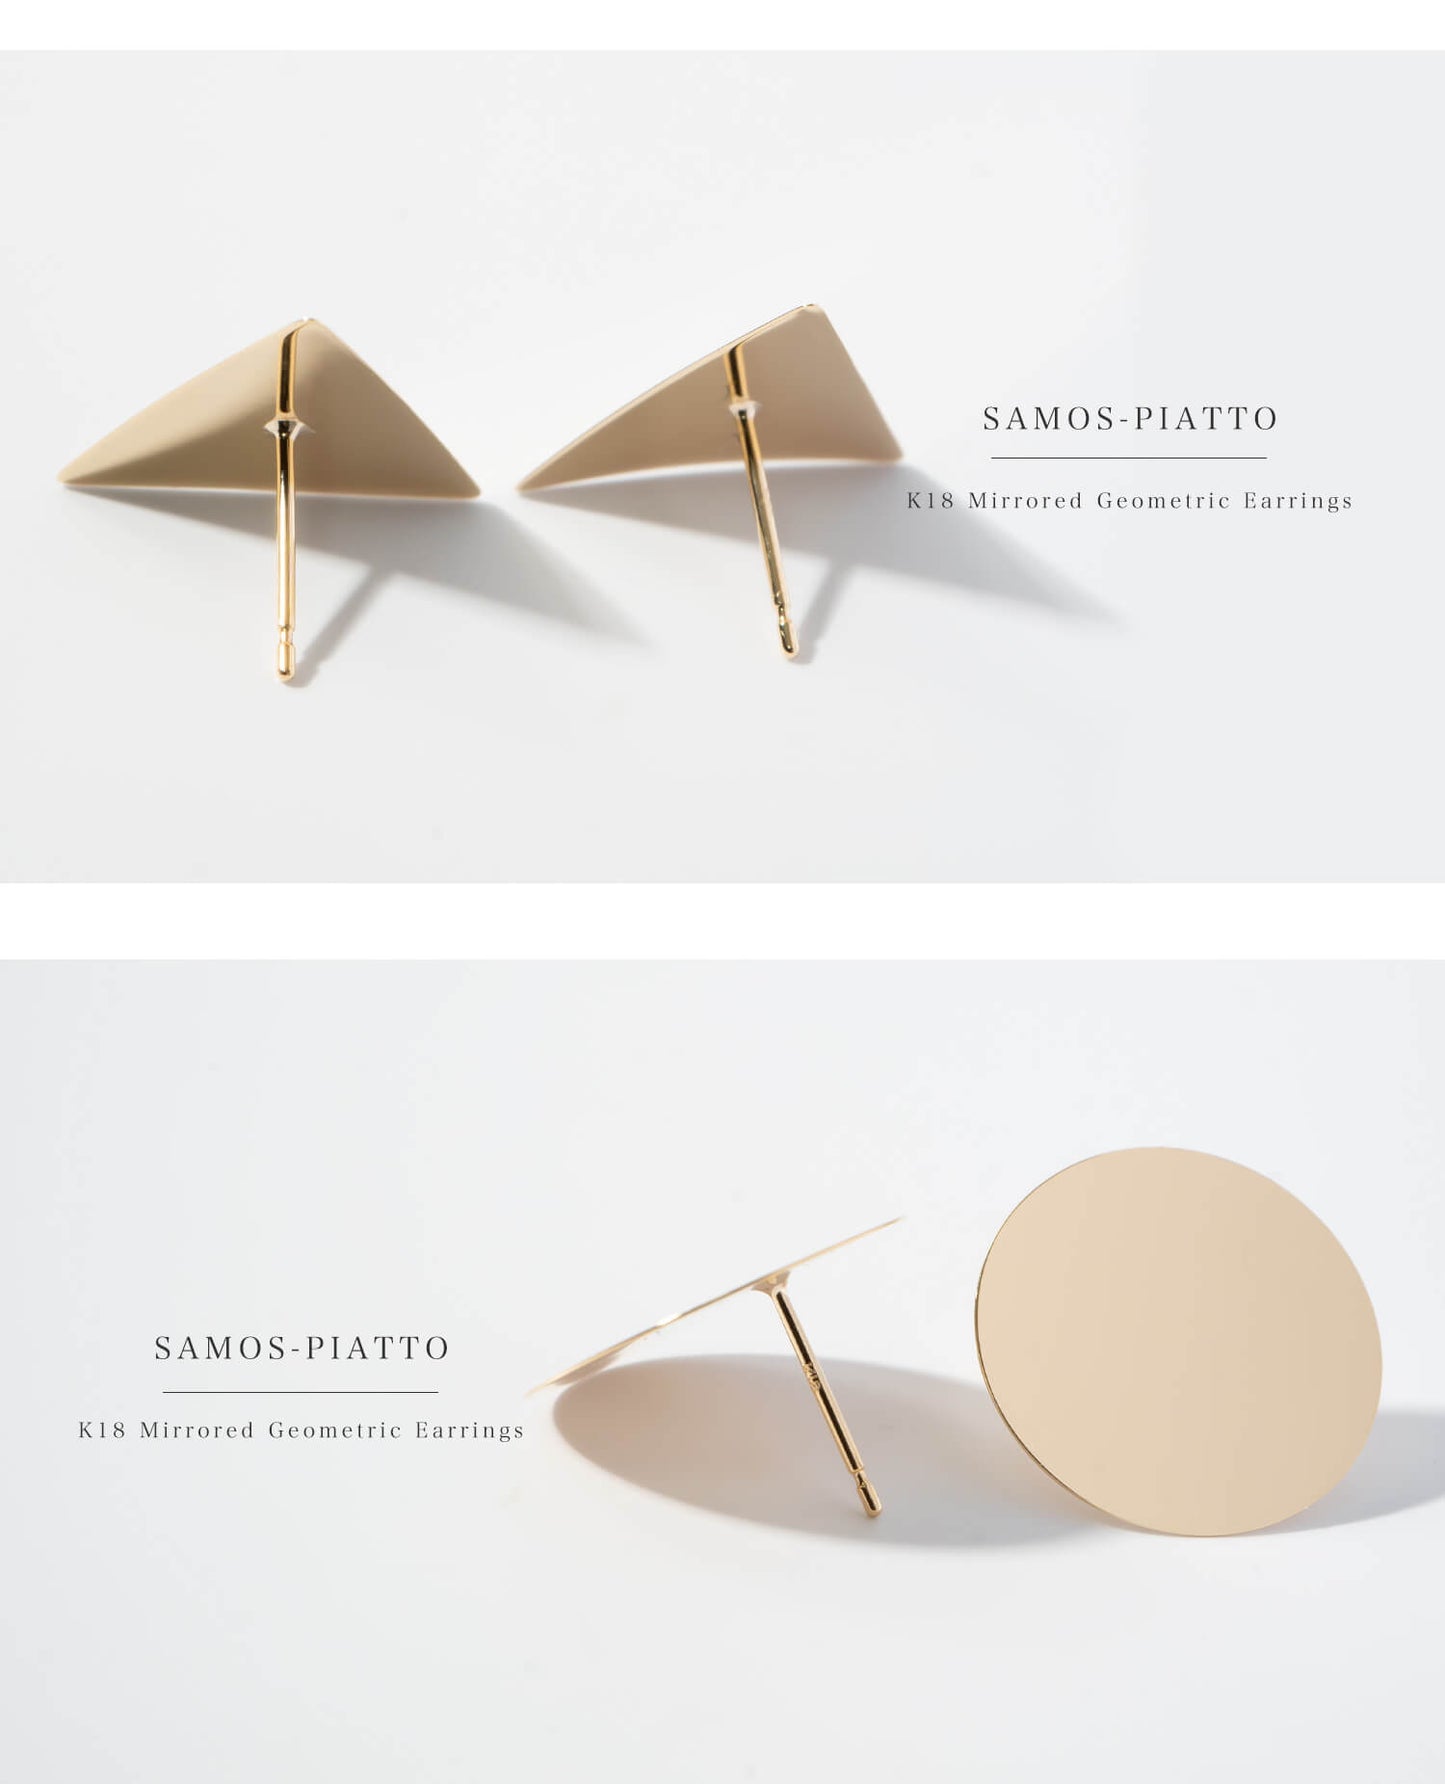 K18 Mirrored Geometric Earrings | SAMOS-PIATTO EARRINGS